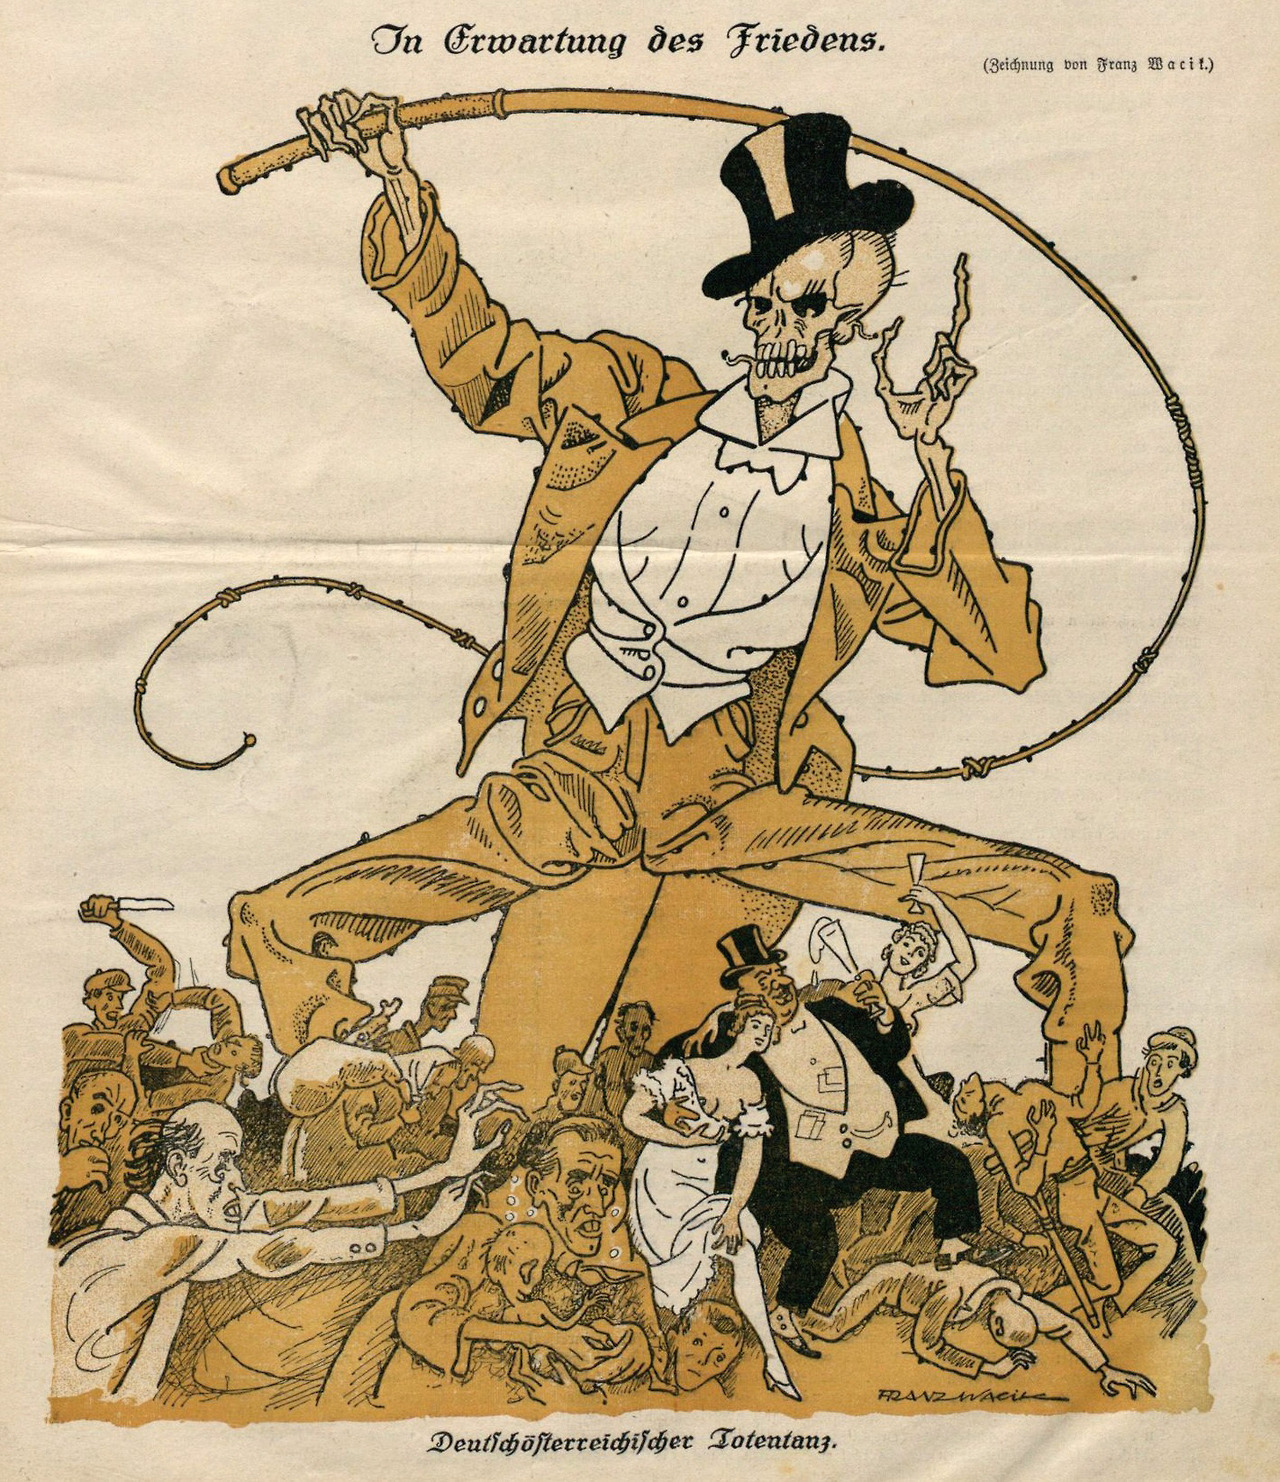 Franz Wacik (1883-1938) cover, “Der Götz”, Aug. 30, 1919
Source